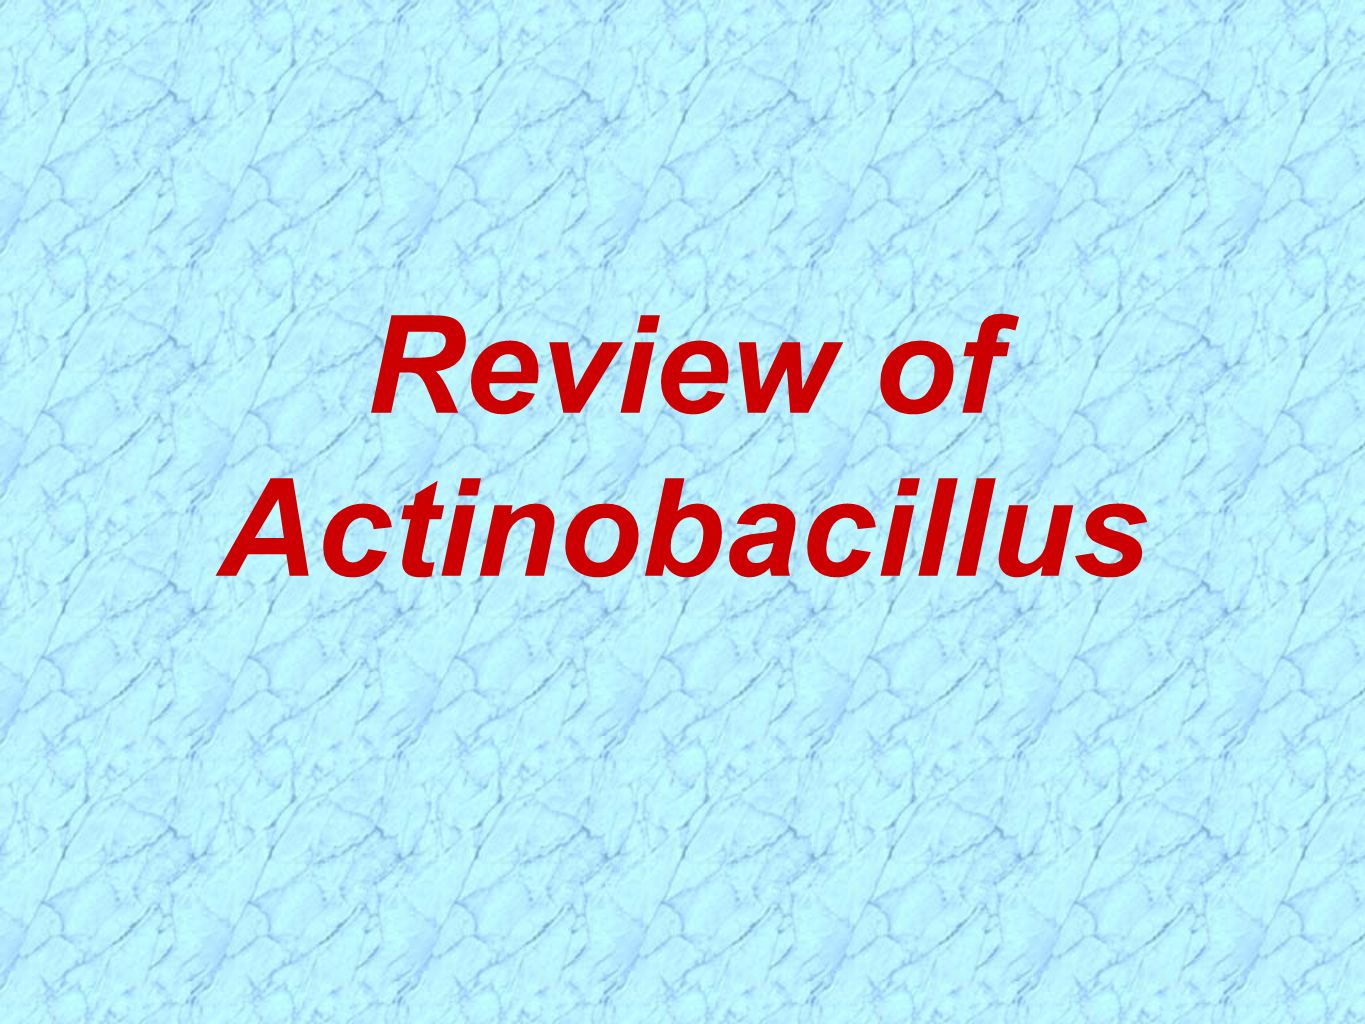 Review of Actinobacillus